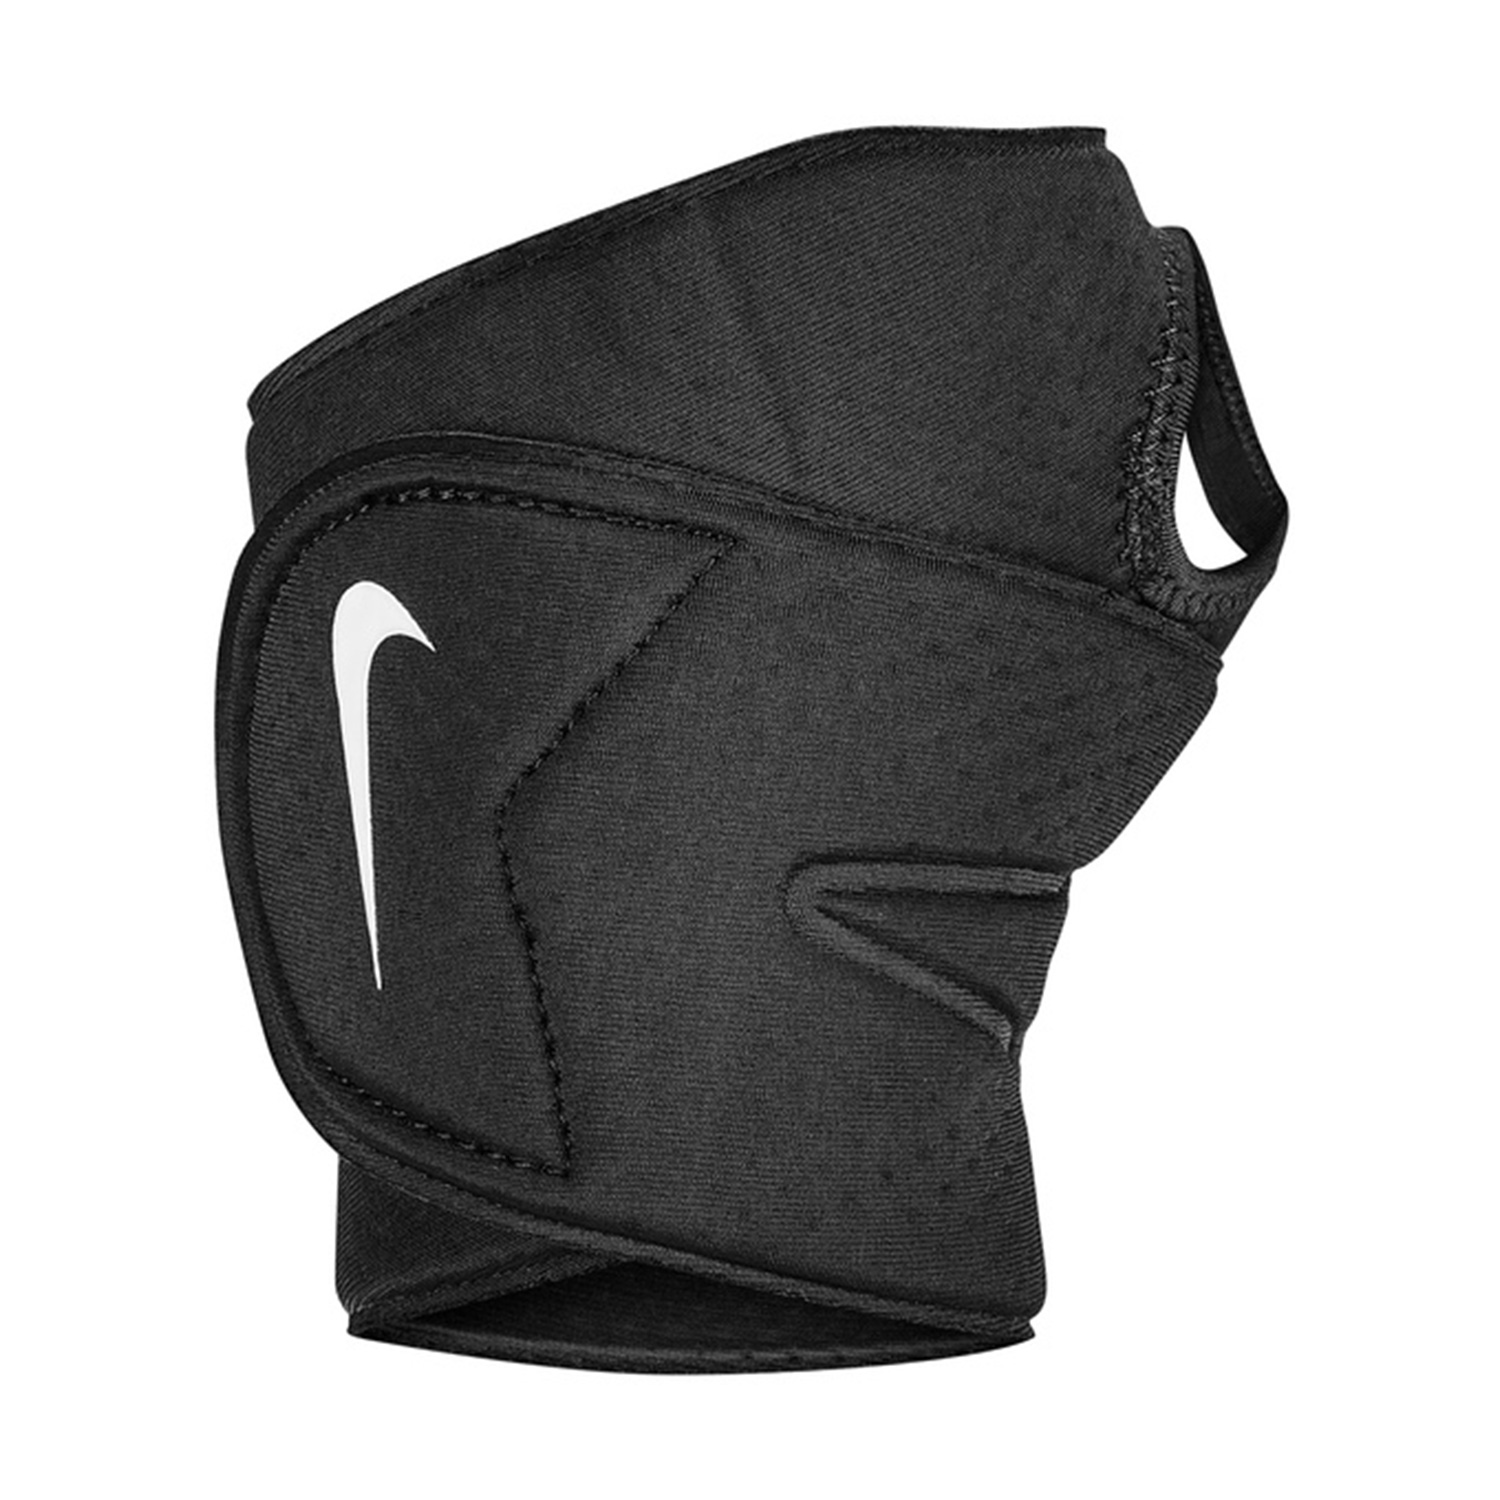 Nike Pro 3.0 Wrist Wrap - Black/White